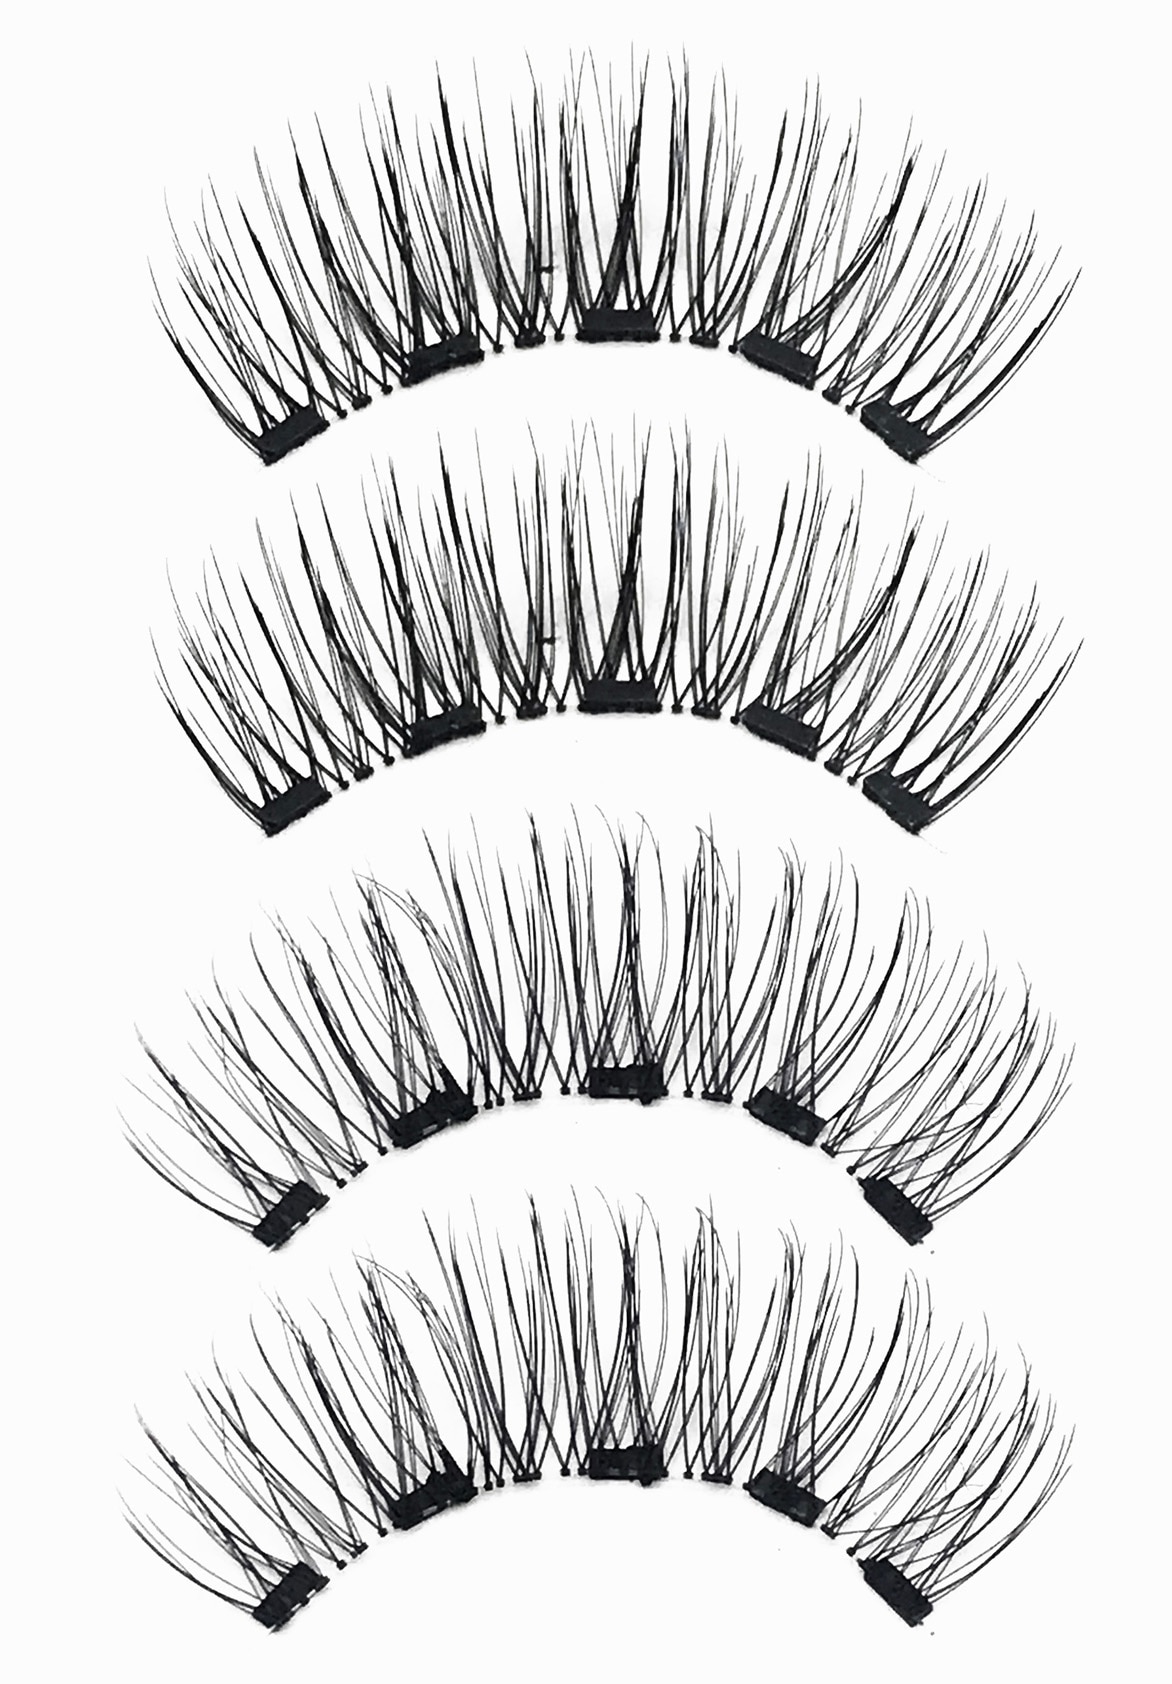 MB Magnetic Eyelashes with 5 Magnets Handmade Reusable 3D Mink False Eyelashes for Makeup faux cils magnetique naturel Tweezers